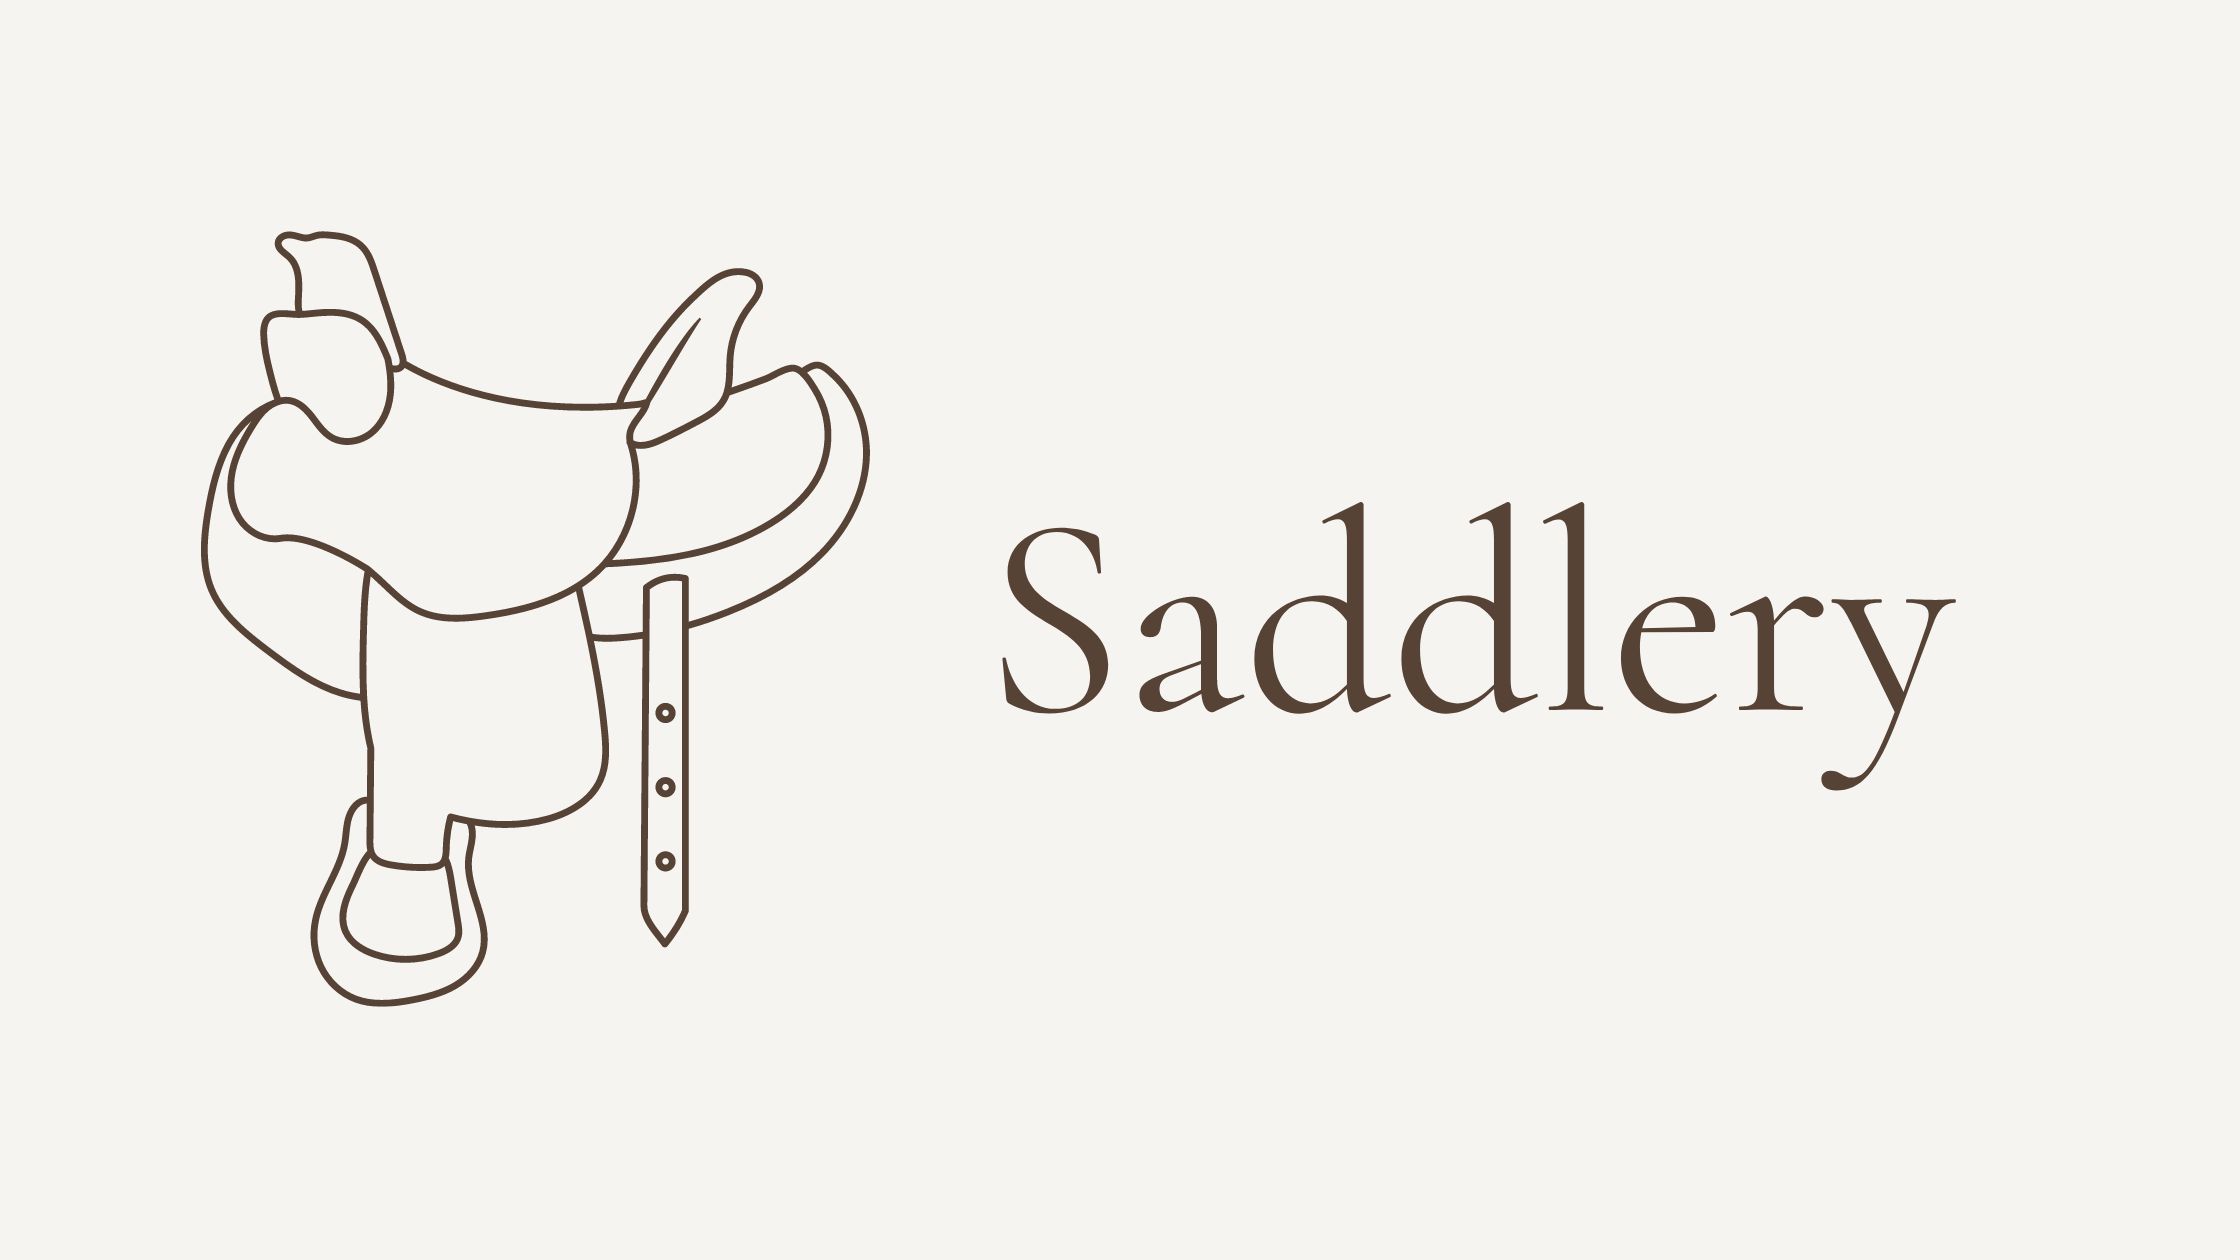 Saddlery cover image